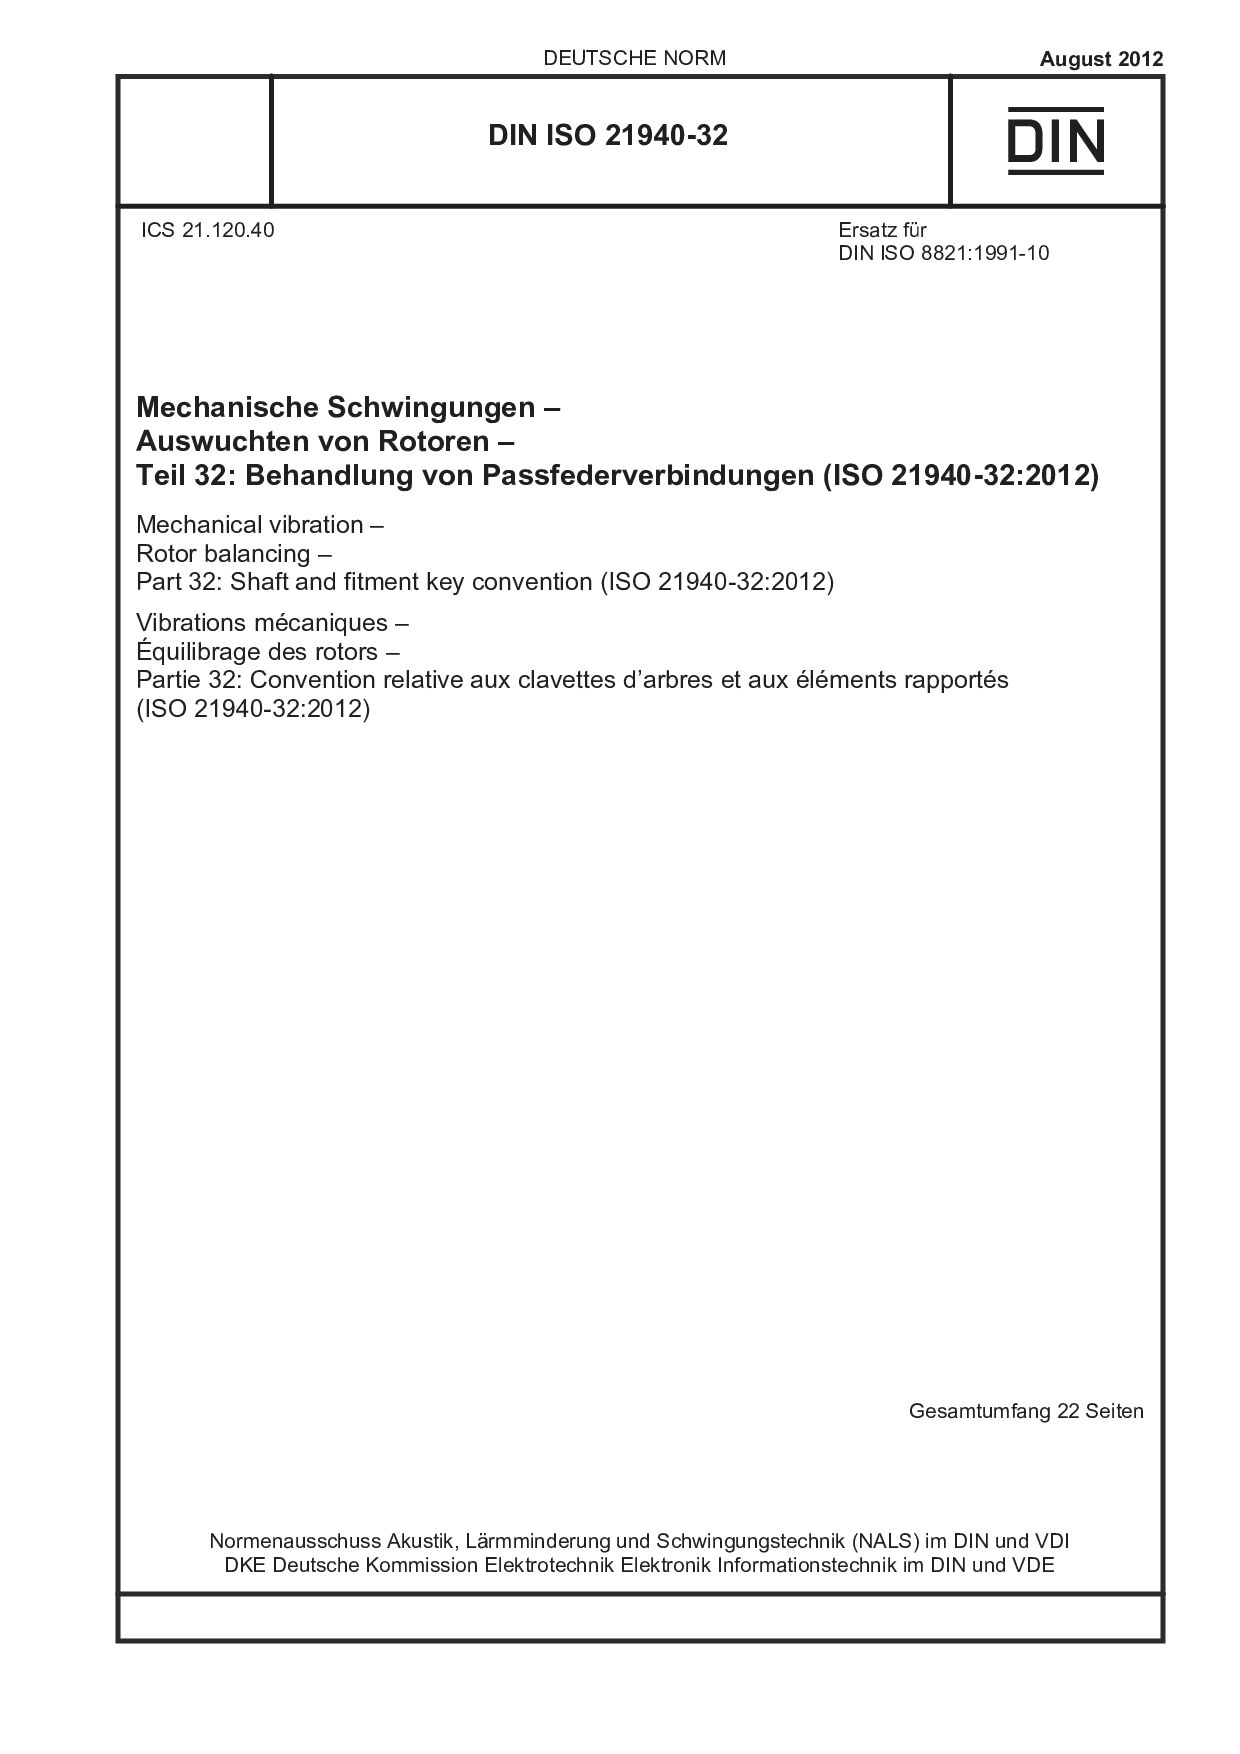 DIN ISO 21940-32:2012